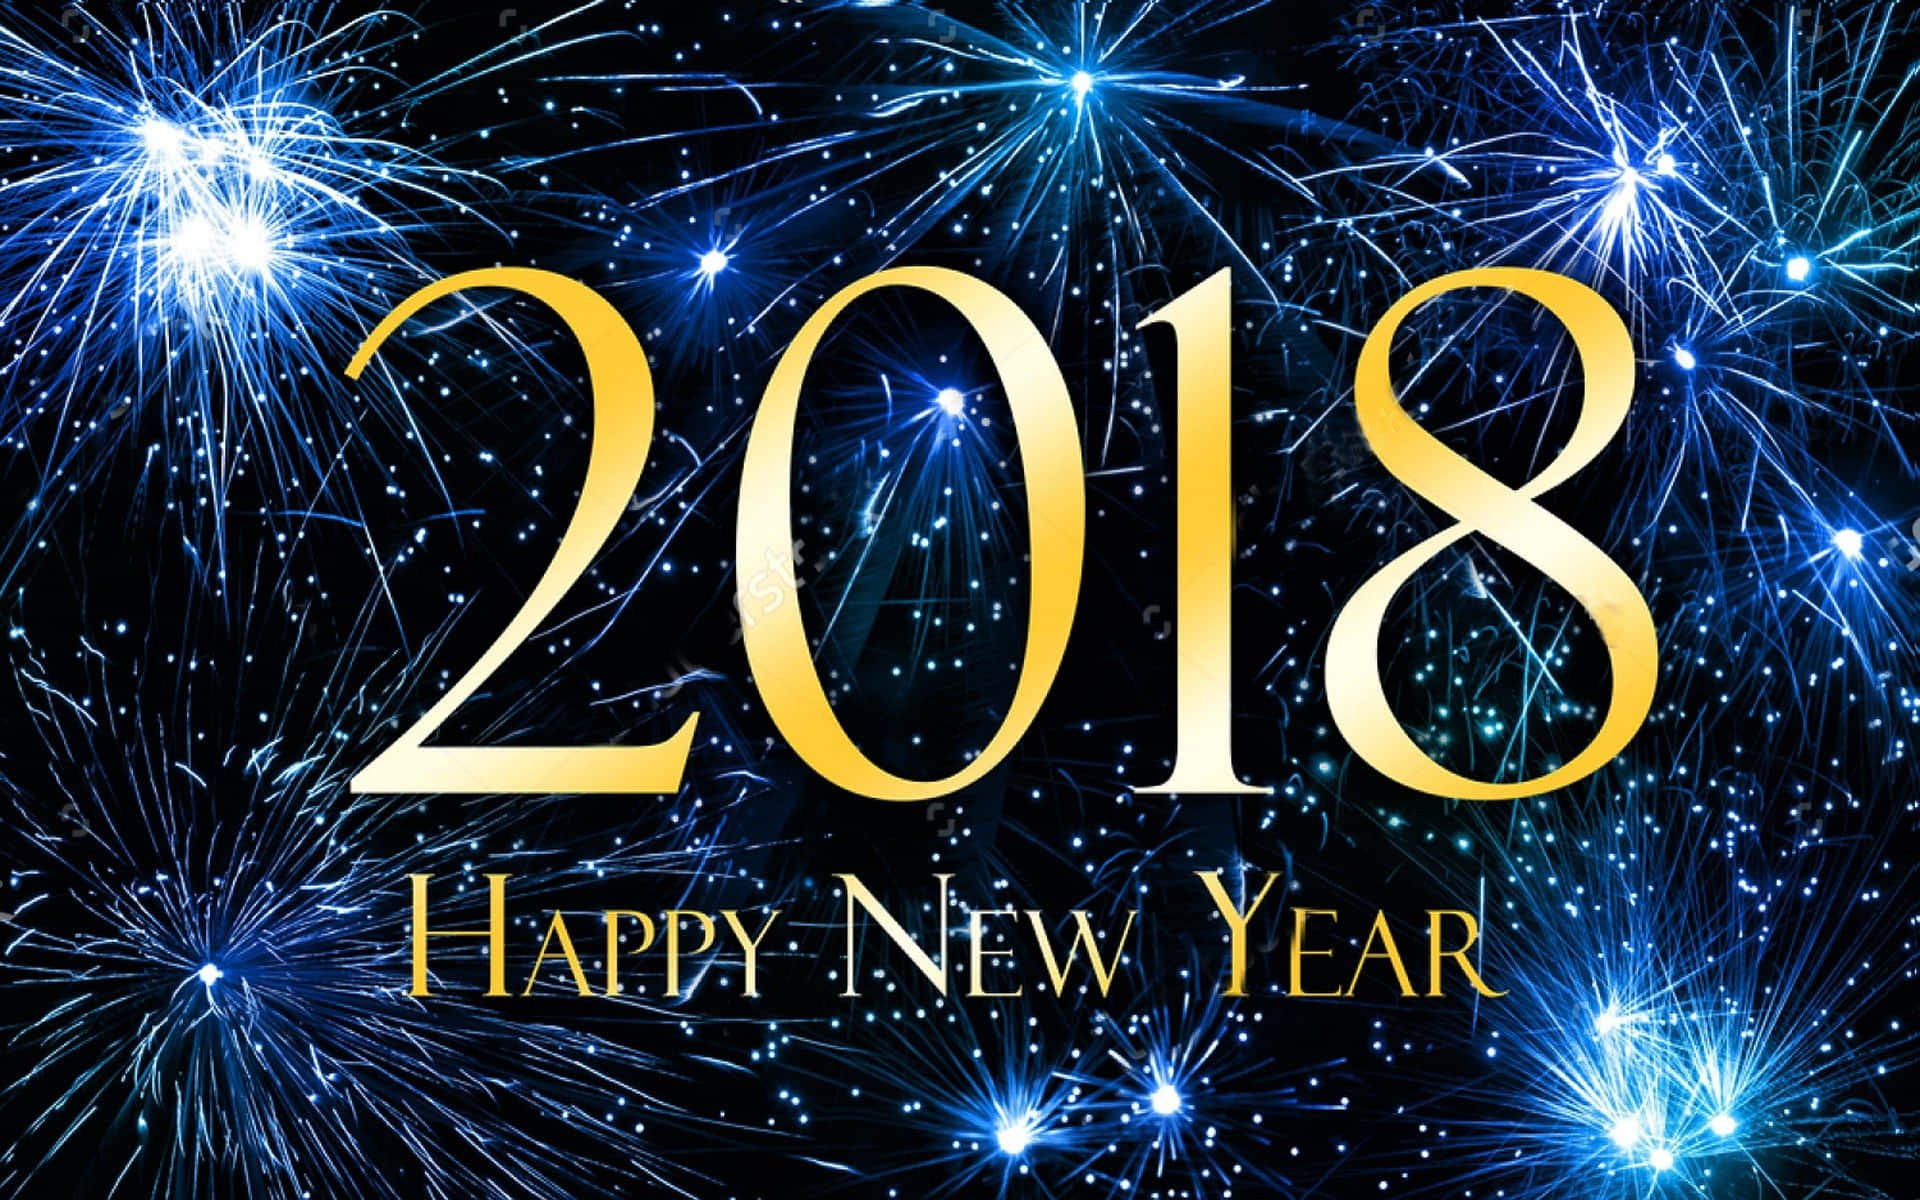 Feliceanno Nuovo 2018 Con Fuochi D'artificio Sfondo